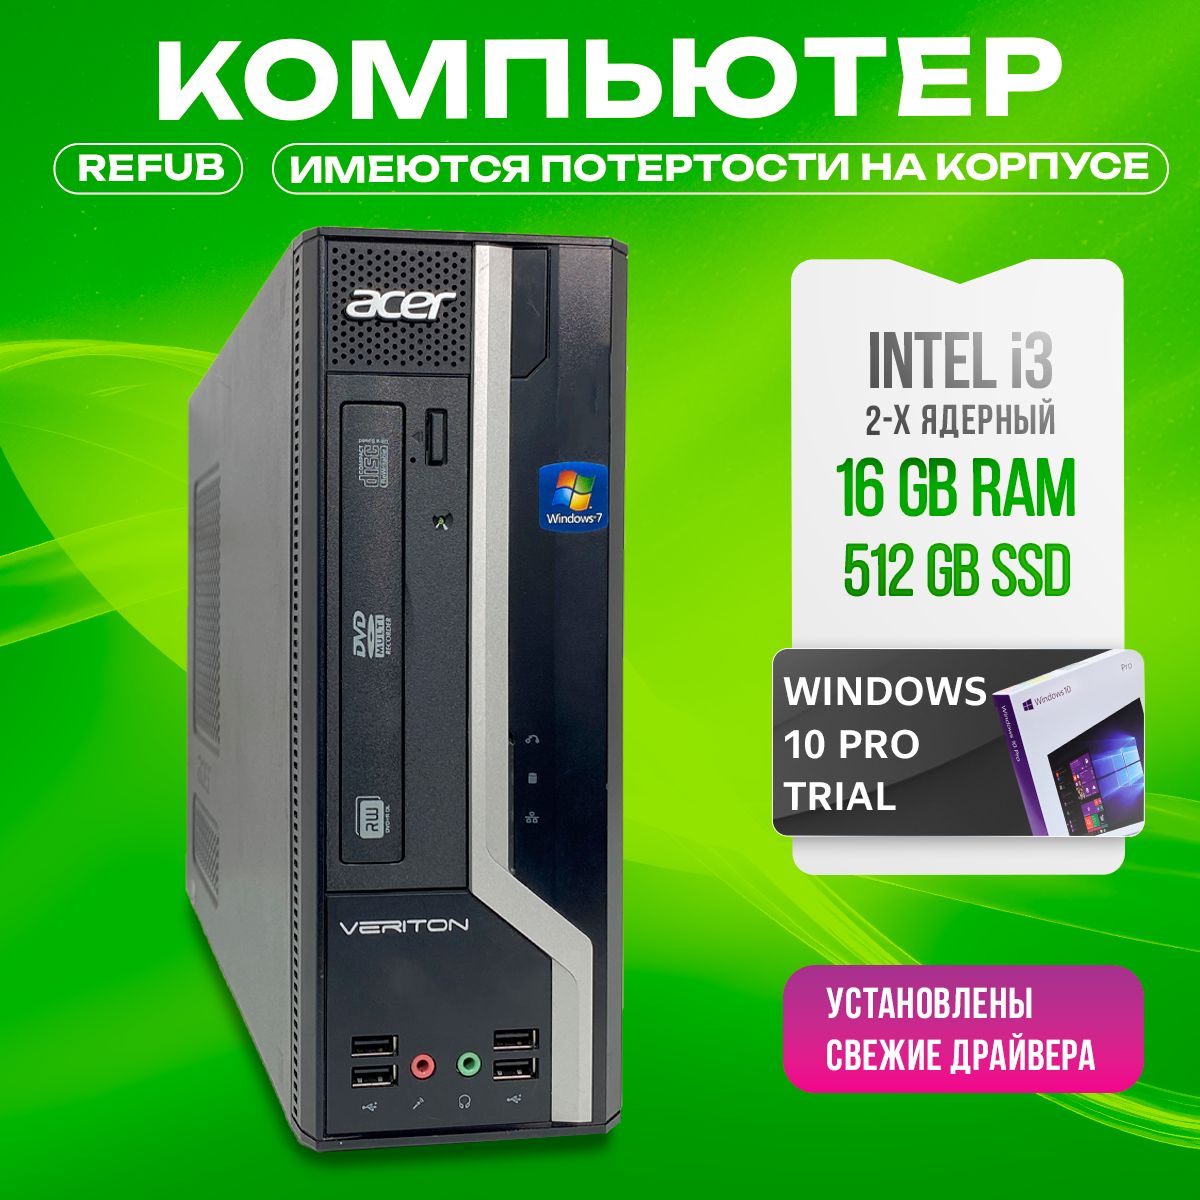 Системный блок Acer Veriton X-series i3-2100/DDR3 16GB/SSD 512GB/ Windows 10 pro trial